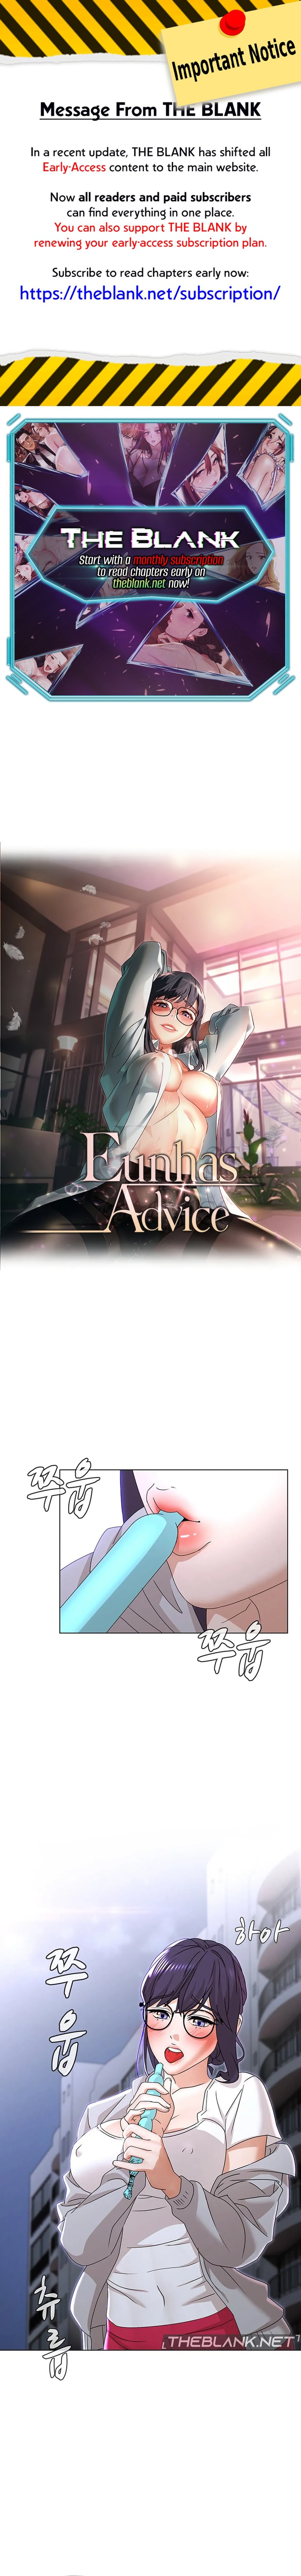 Eunha’s Advice - Chapter 3 Page 1